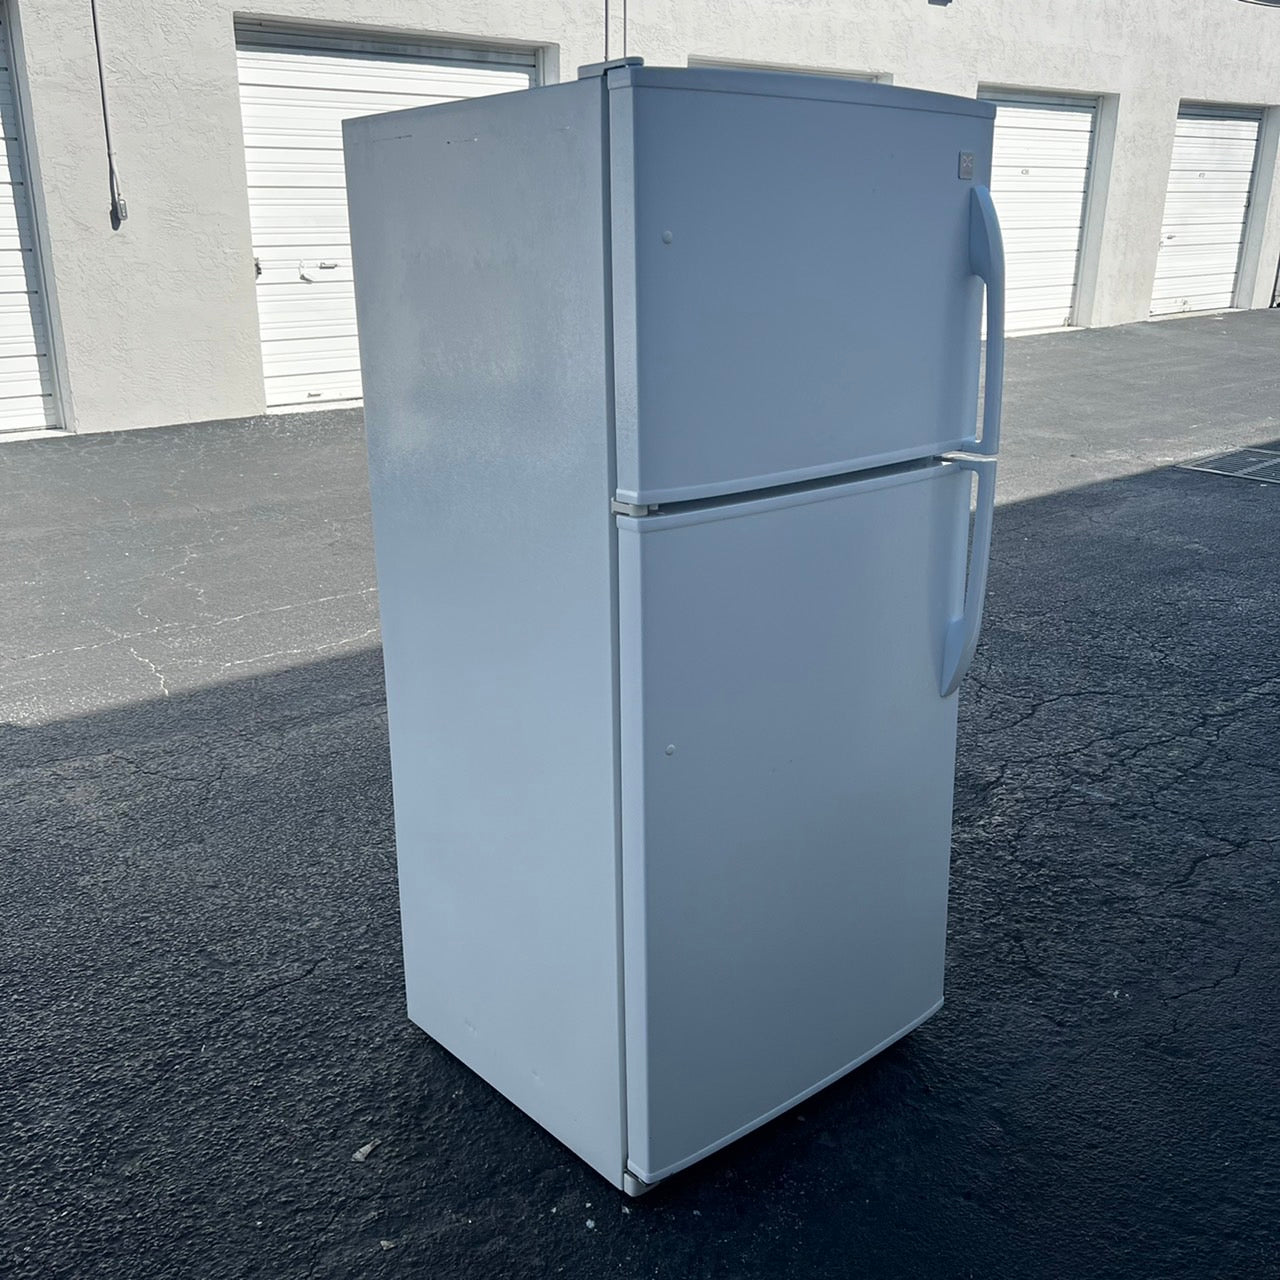 Daewoo Top and Bottom Refrigerator